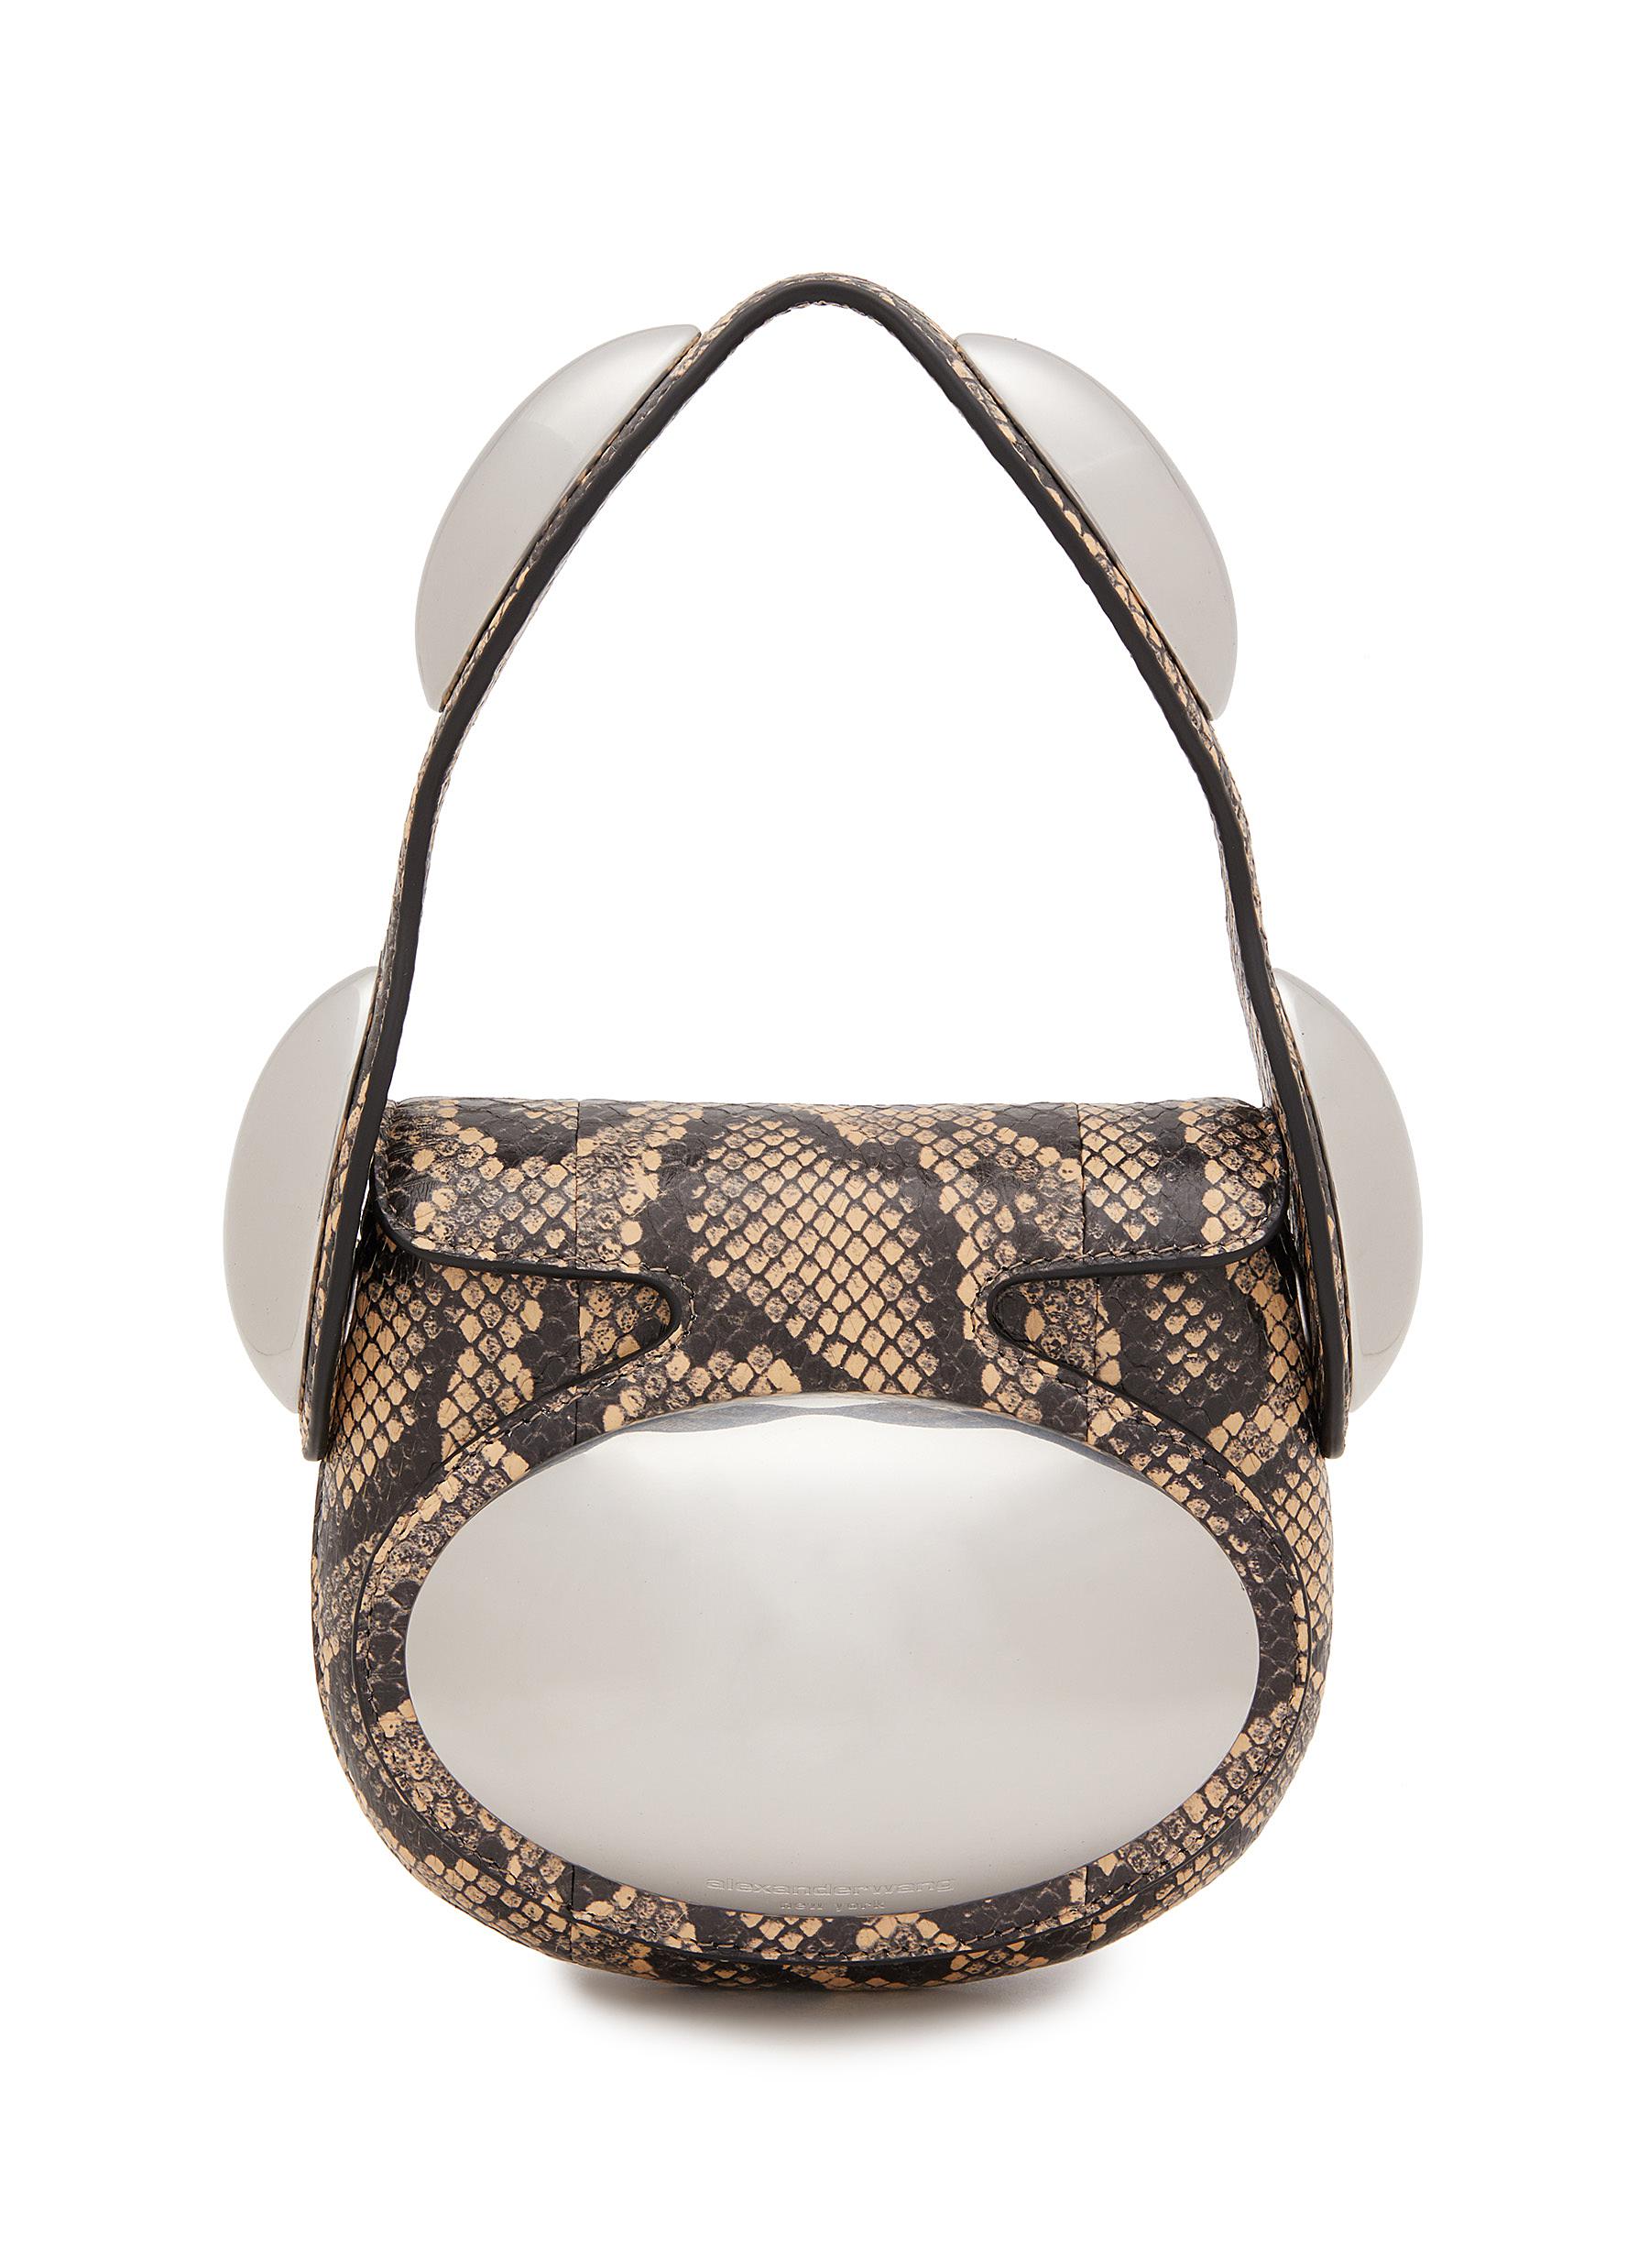 ALEXANDER WANG Mini Dome Snakeskin Leather Bag